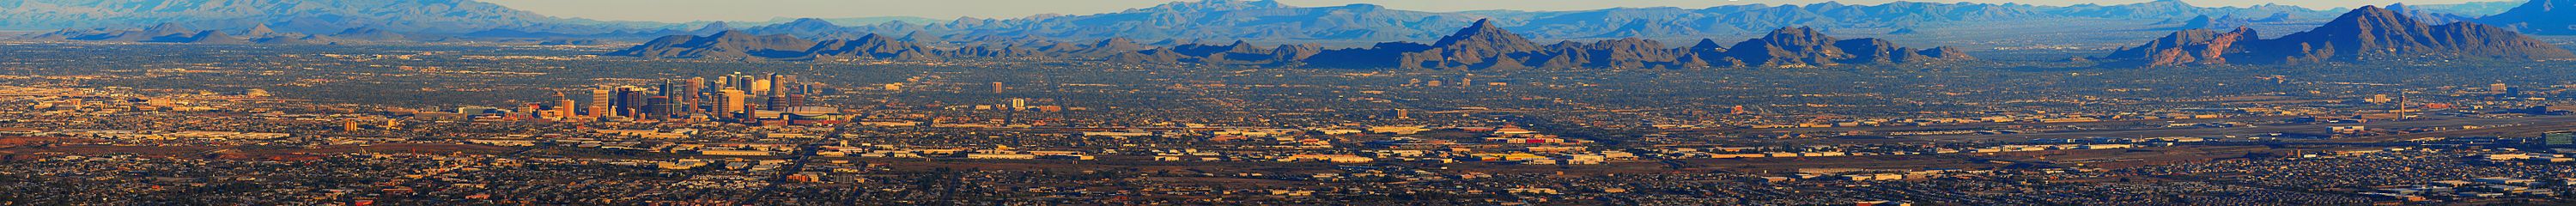 En panoramaudsigt over Phoenix fra South Mountain Range, vinter 2008  